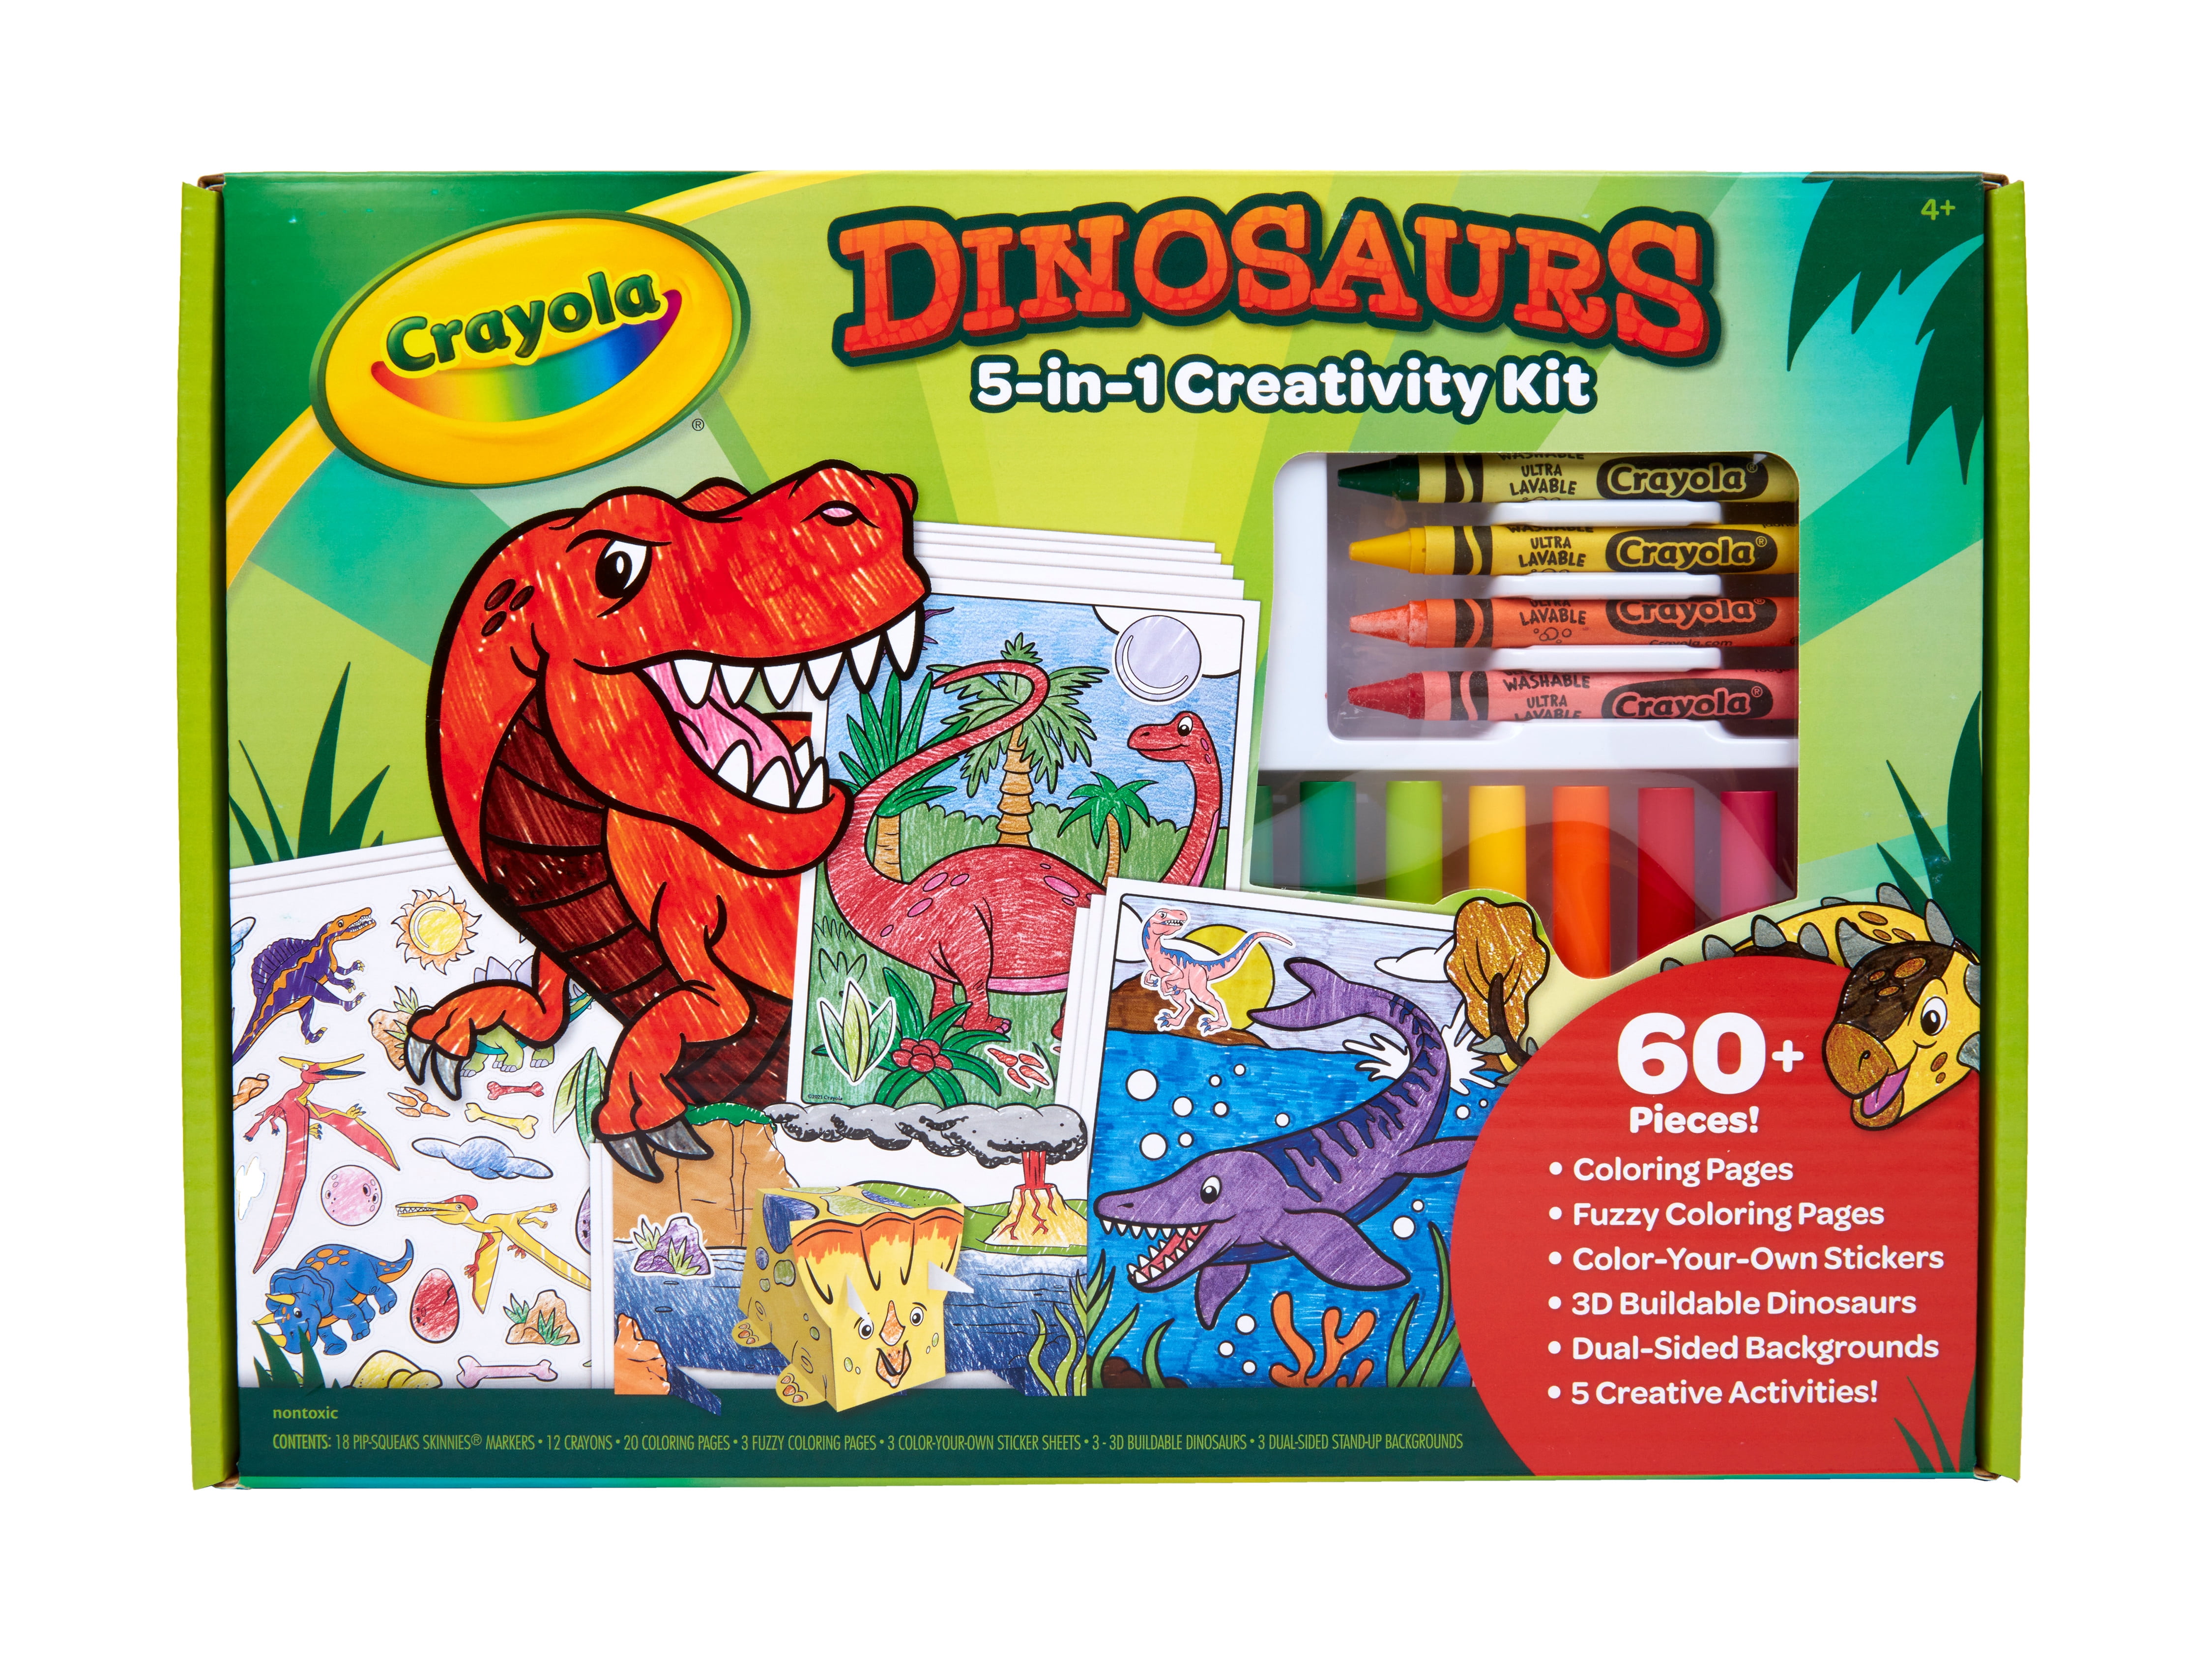 Crayola 5-in-1 Dinosaurs Creativity Kit